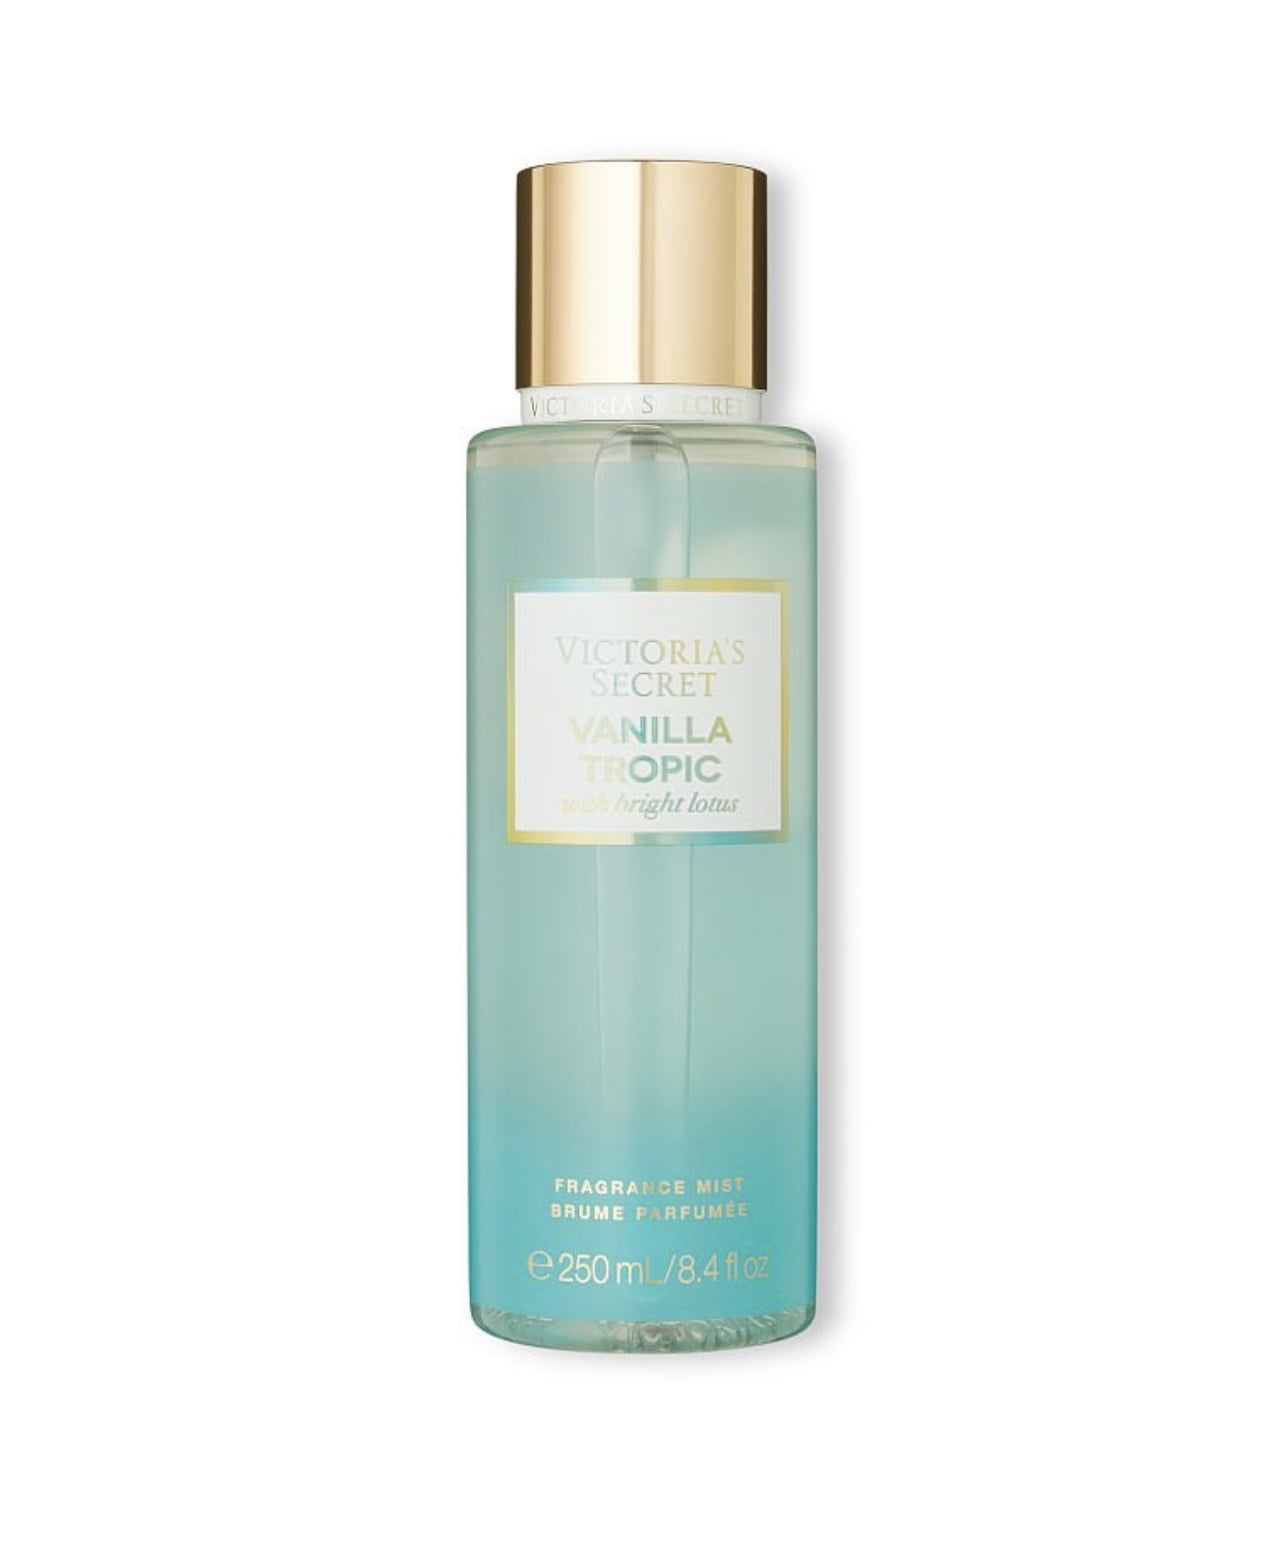 Victoria's Secret Vanilla Tropic Fragrance Mist 2 Pack 8.4 fl oz each 